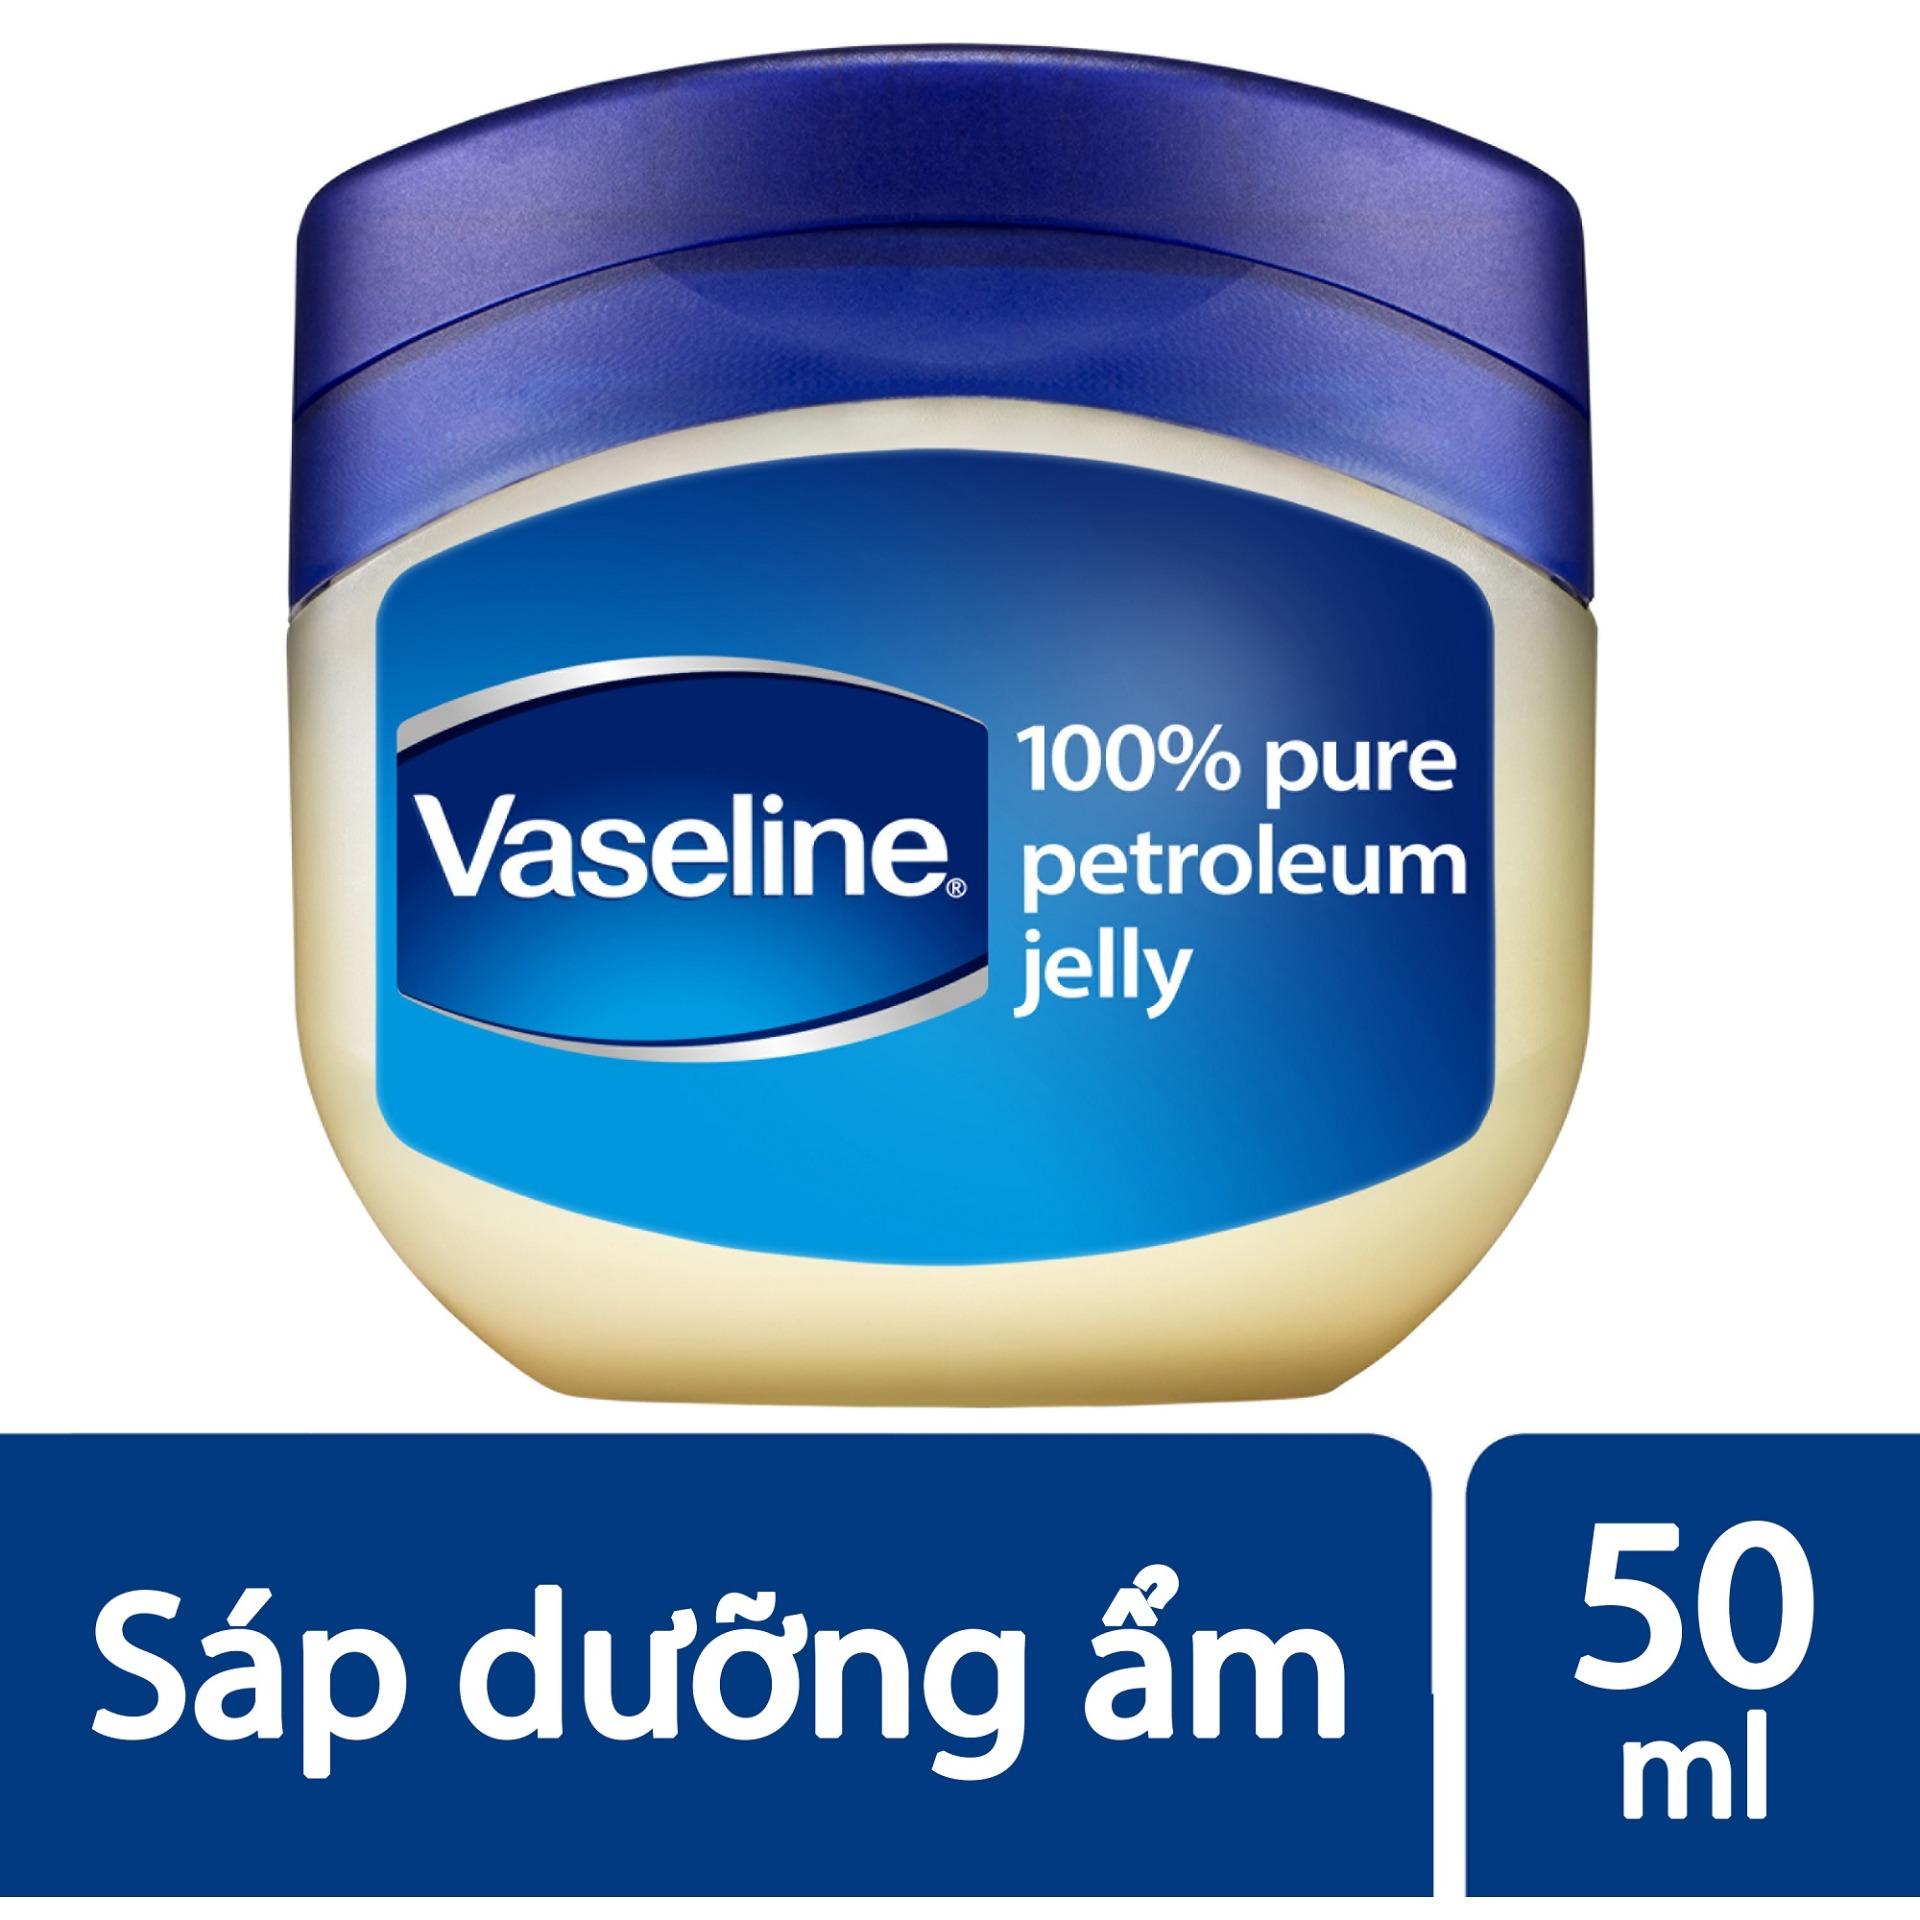 Sáp dưỡng ẩm Vaseline 50ml